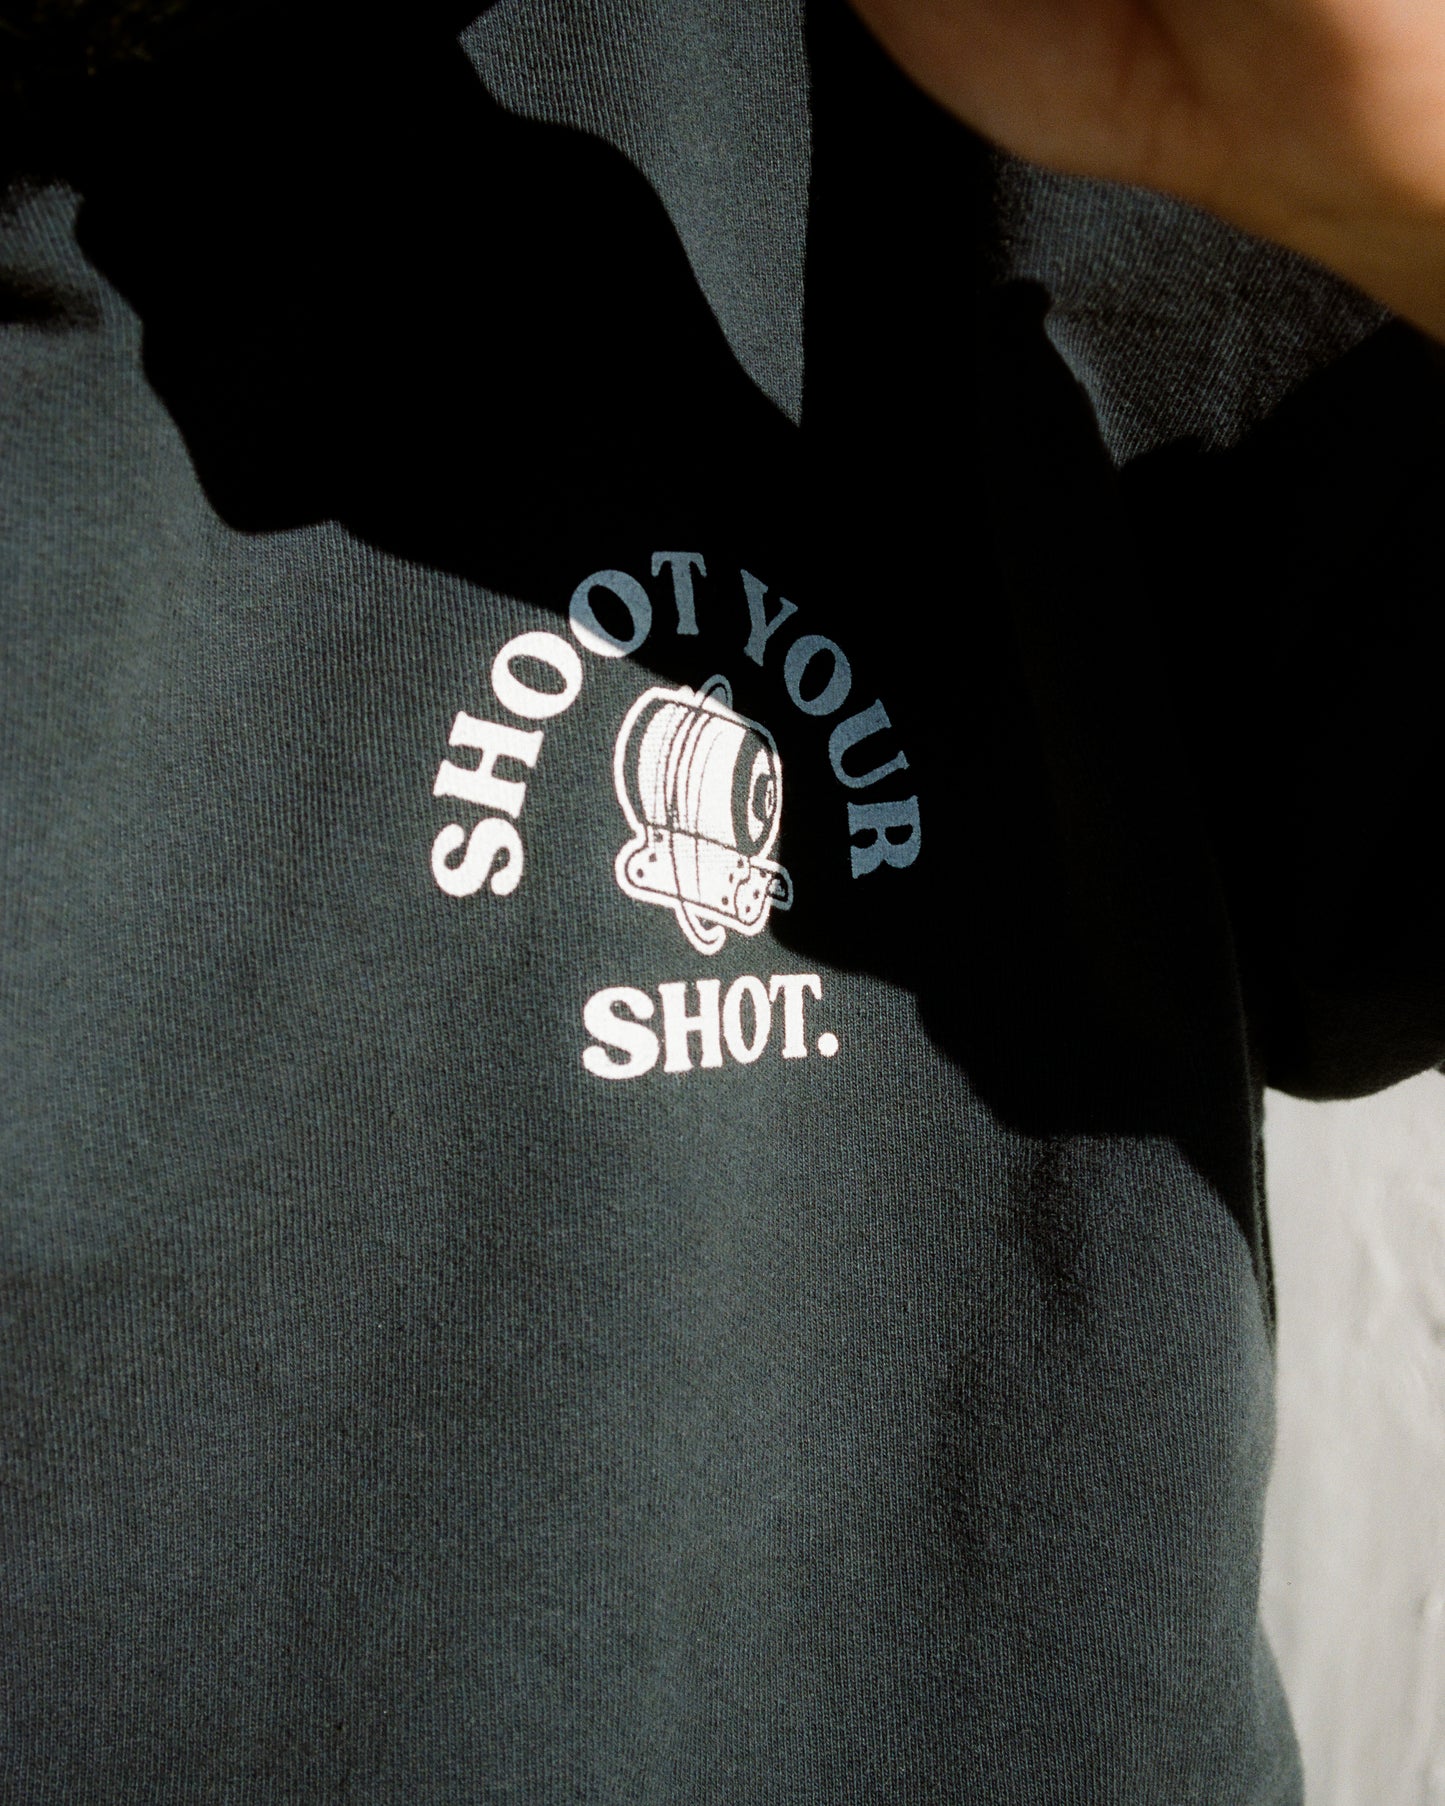 SHOOT YOUR SHOT HOODIE